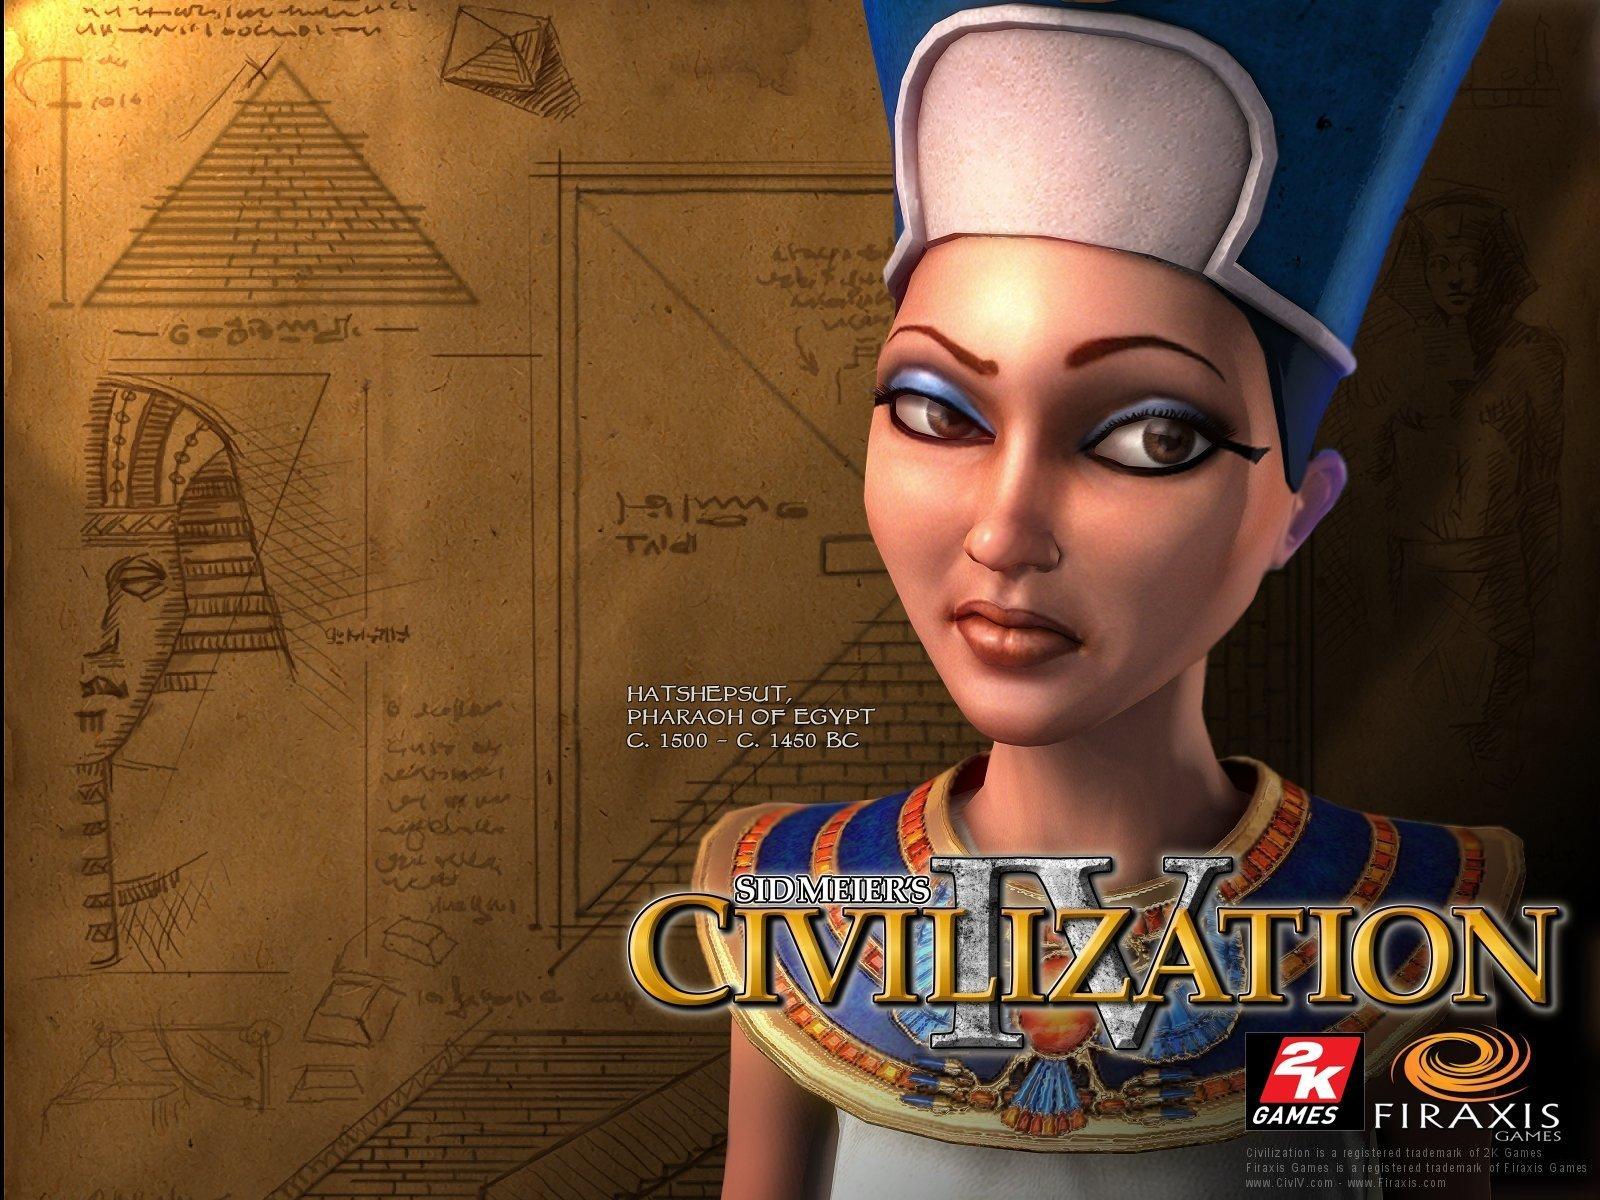 Sid Meier's Civilization image Civilization 4 HD wallpaper